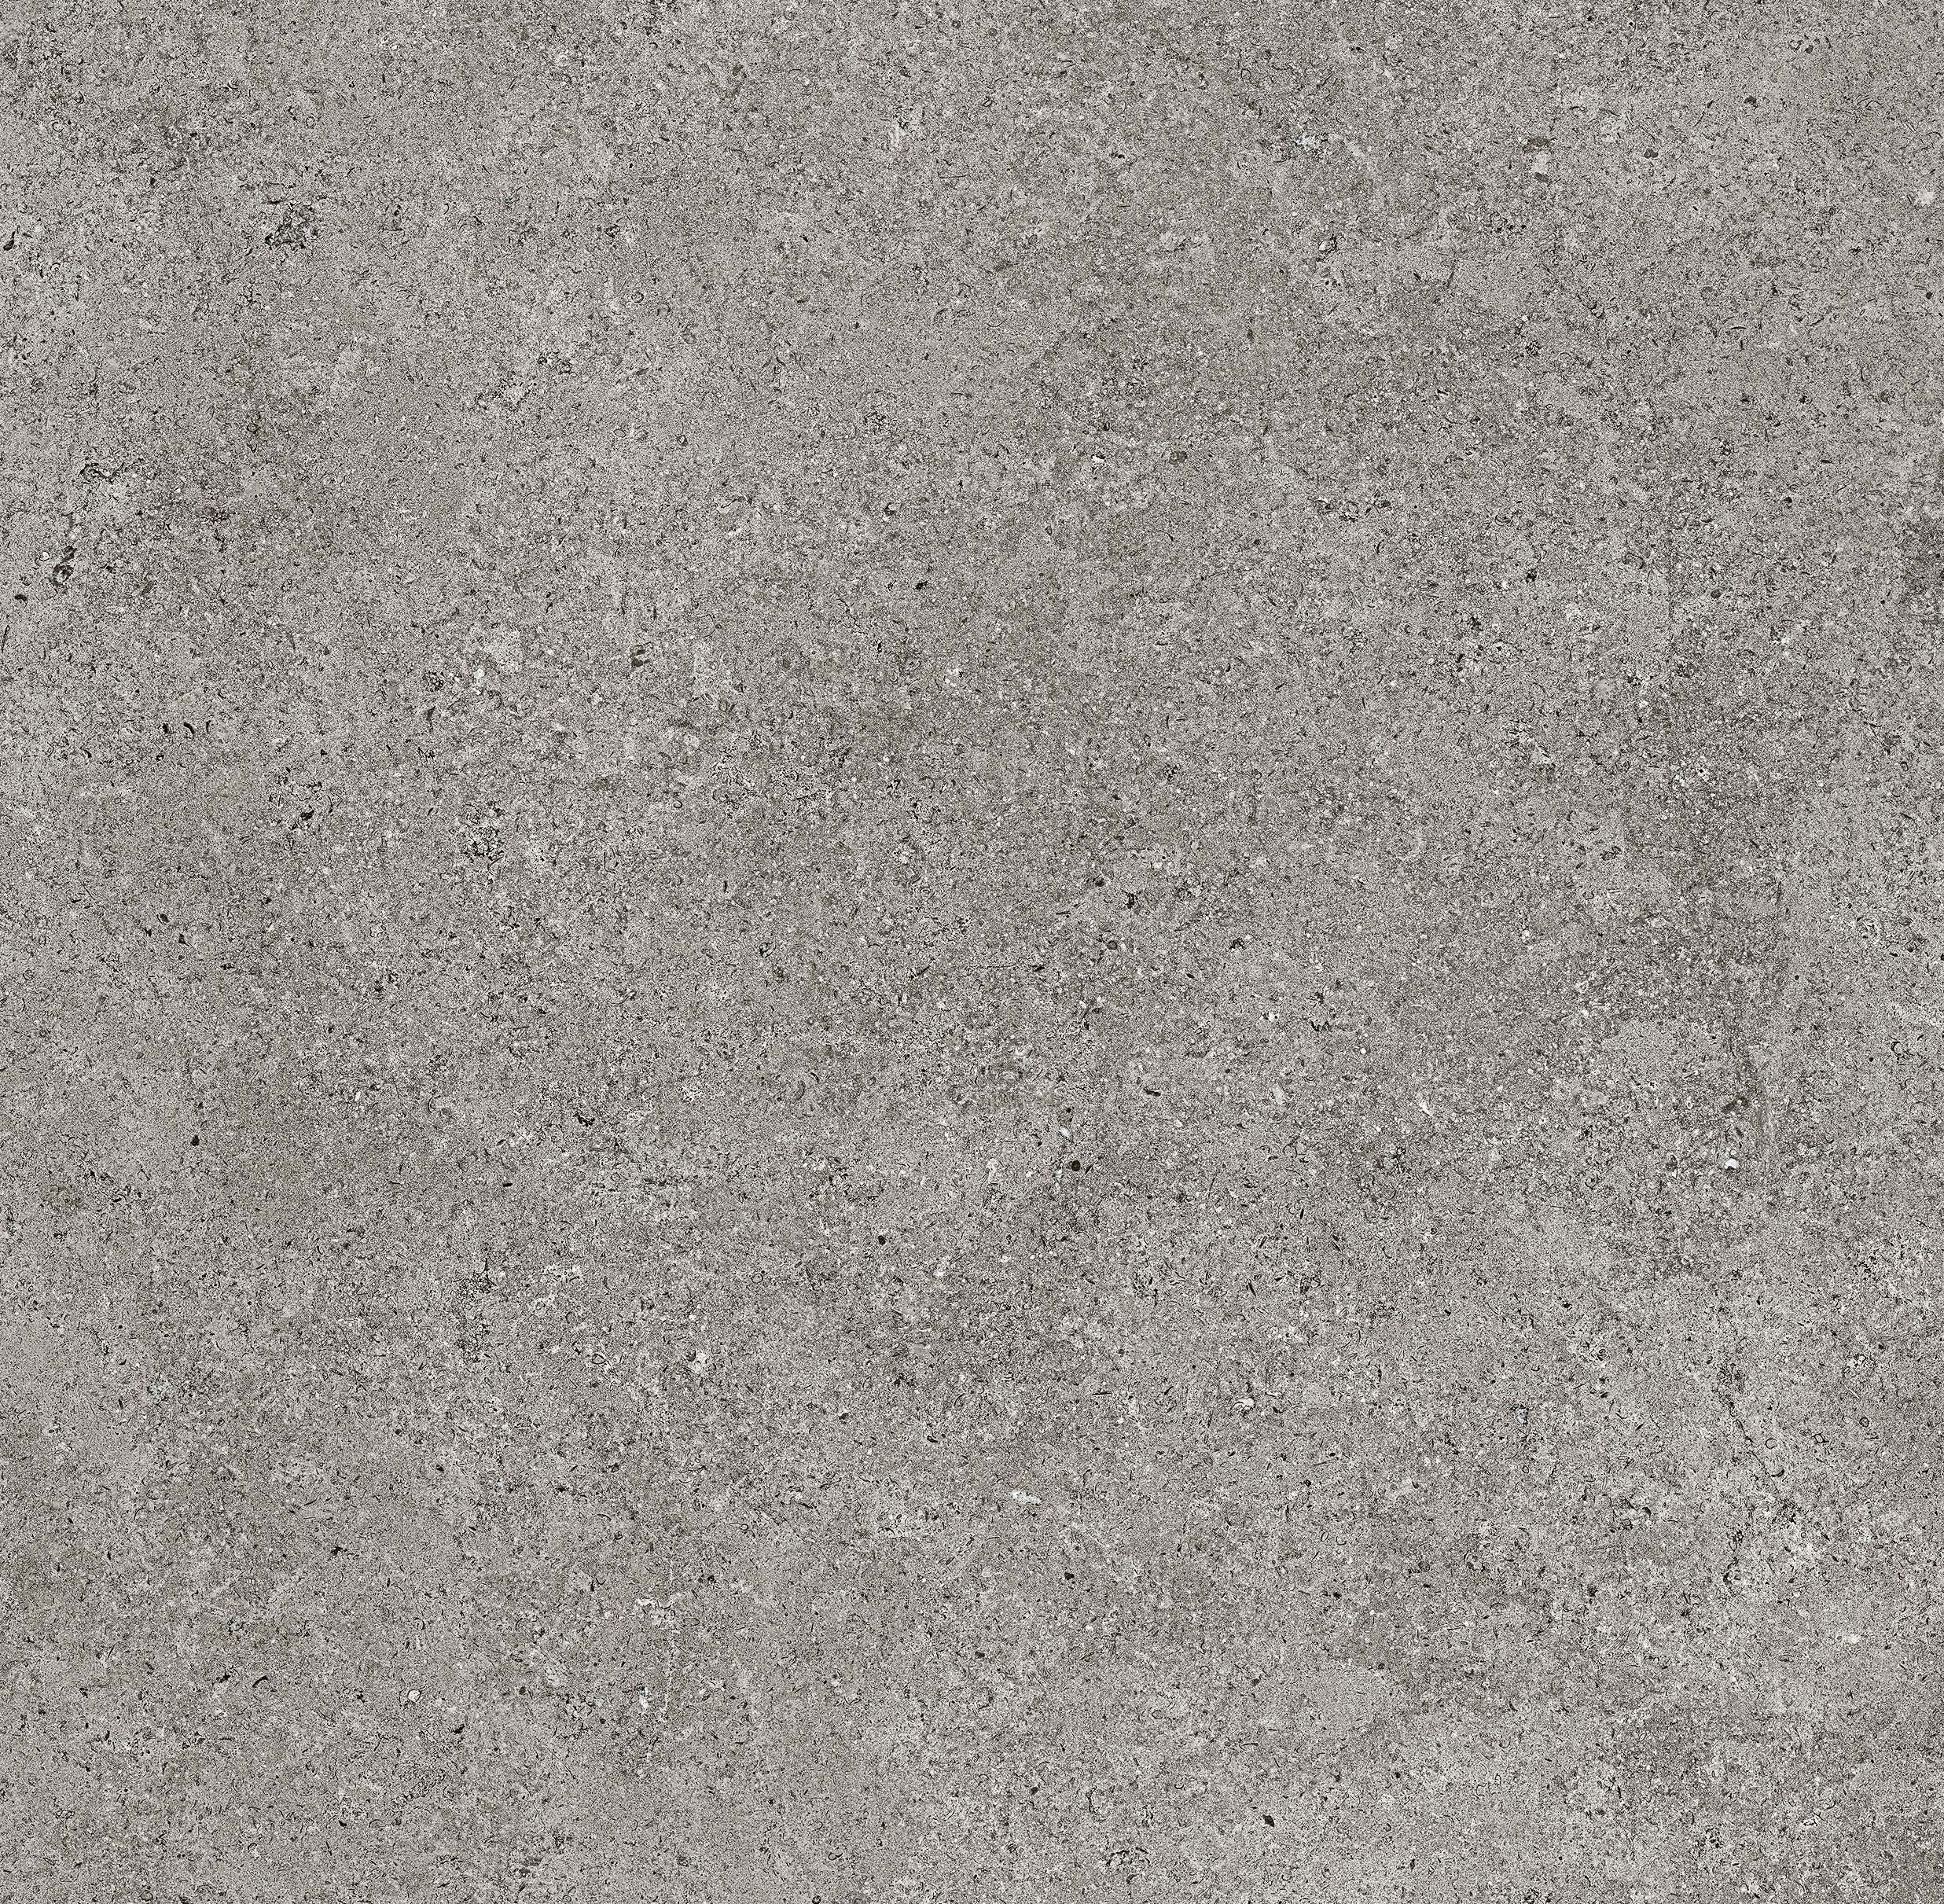 Quara - Cemento - Dark grey - 60x60